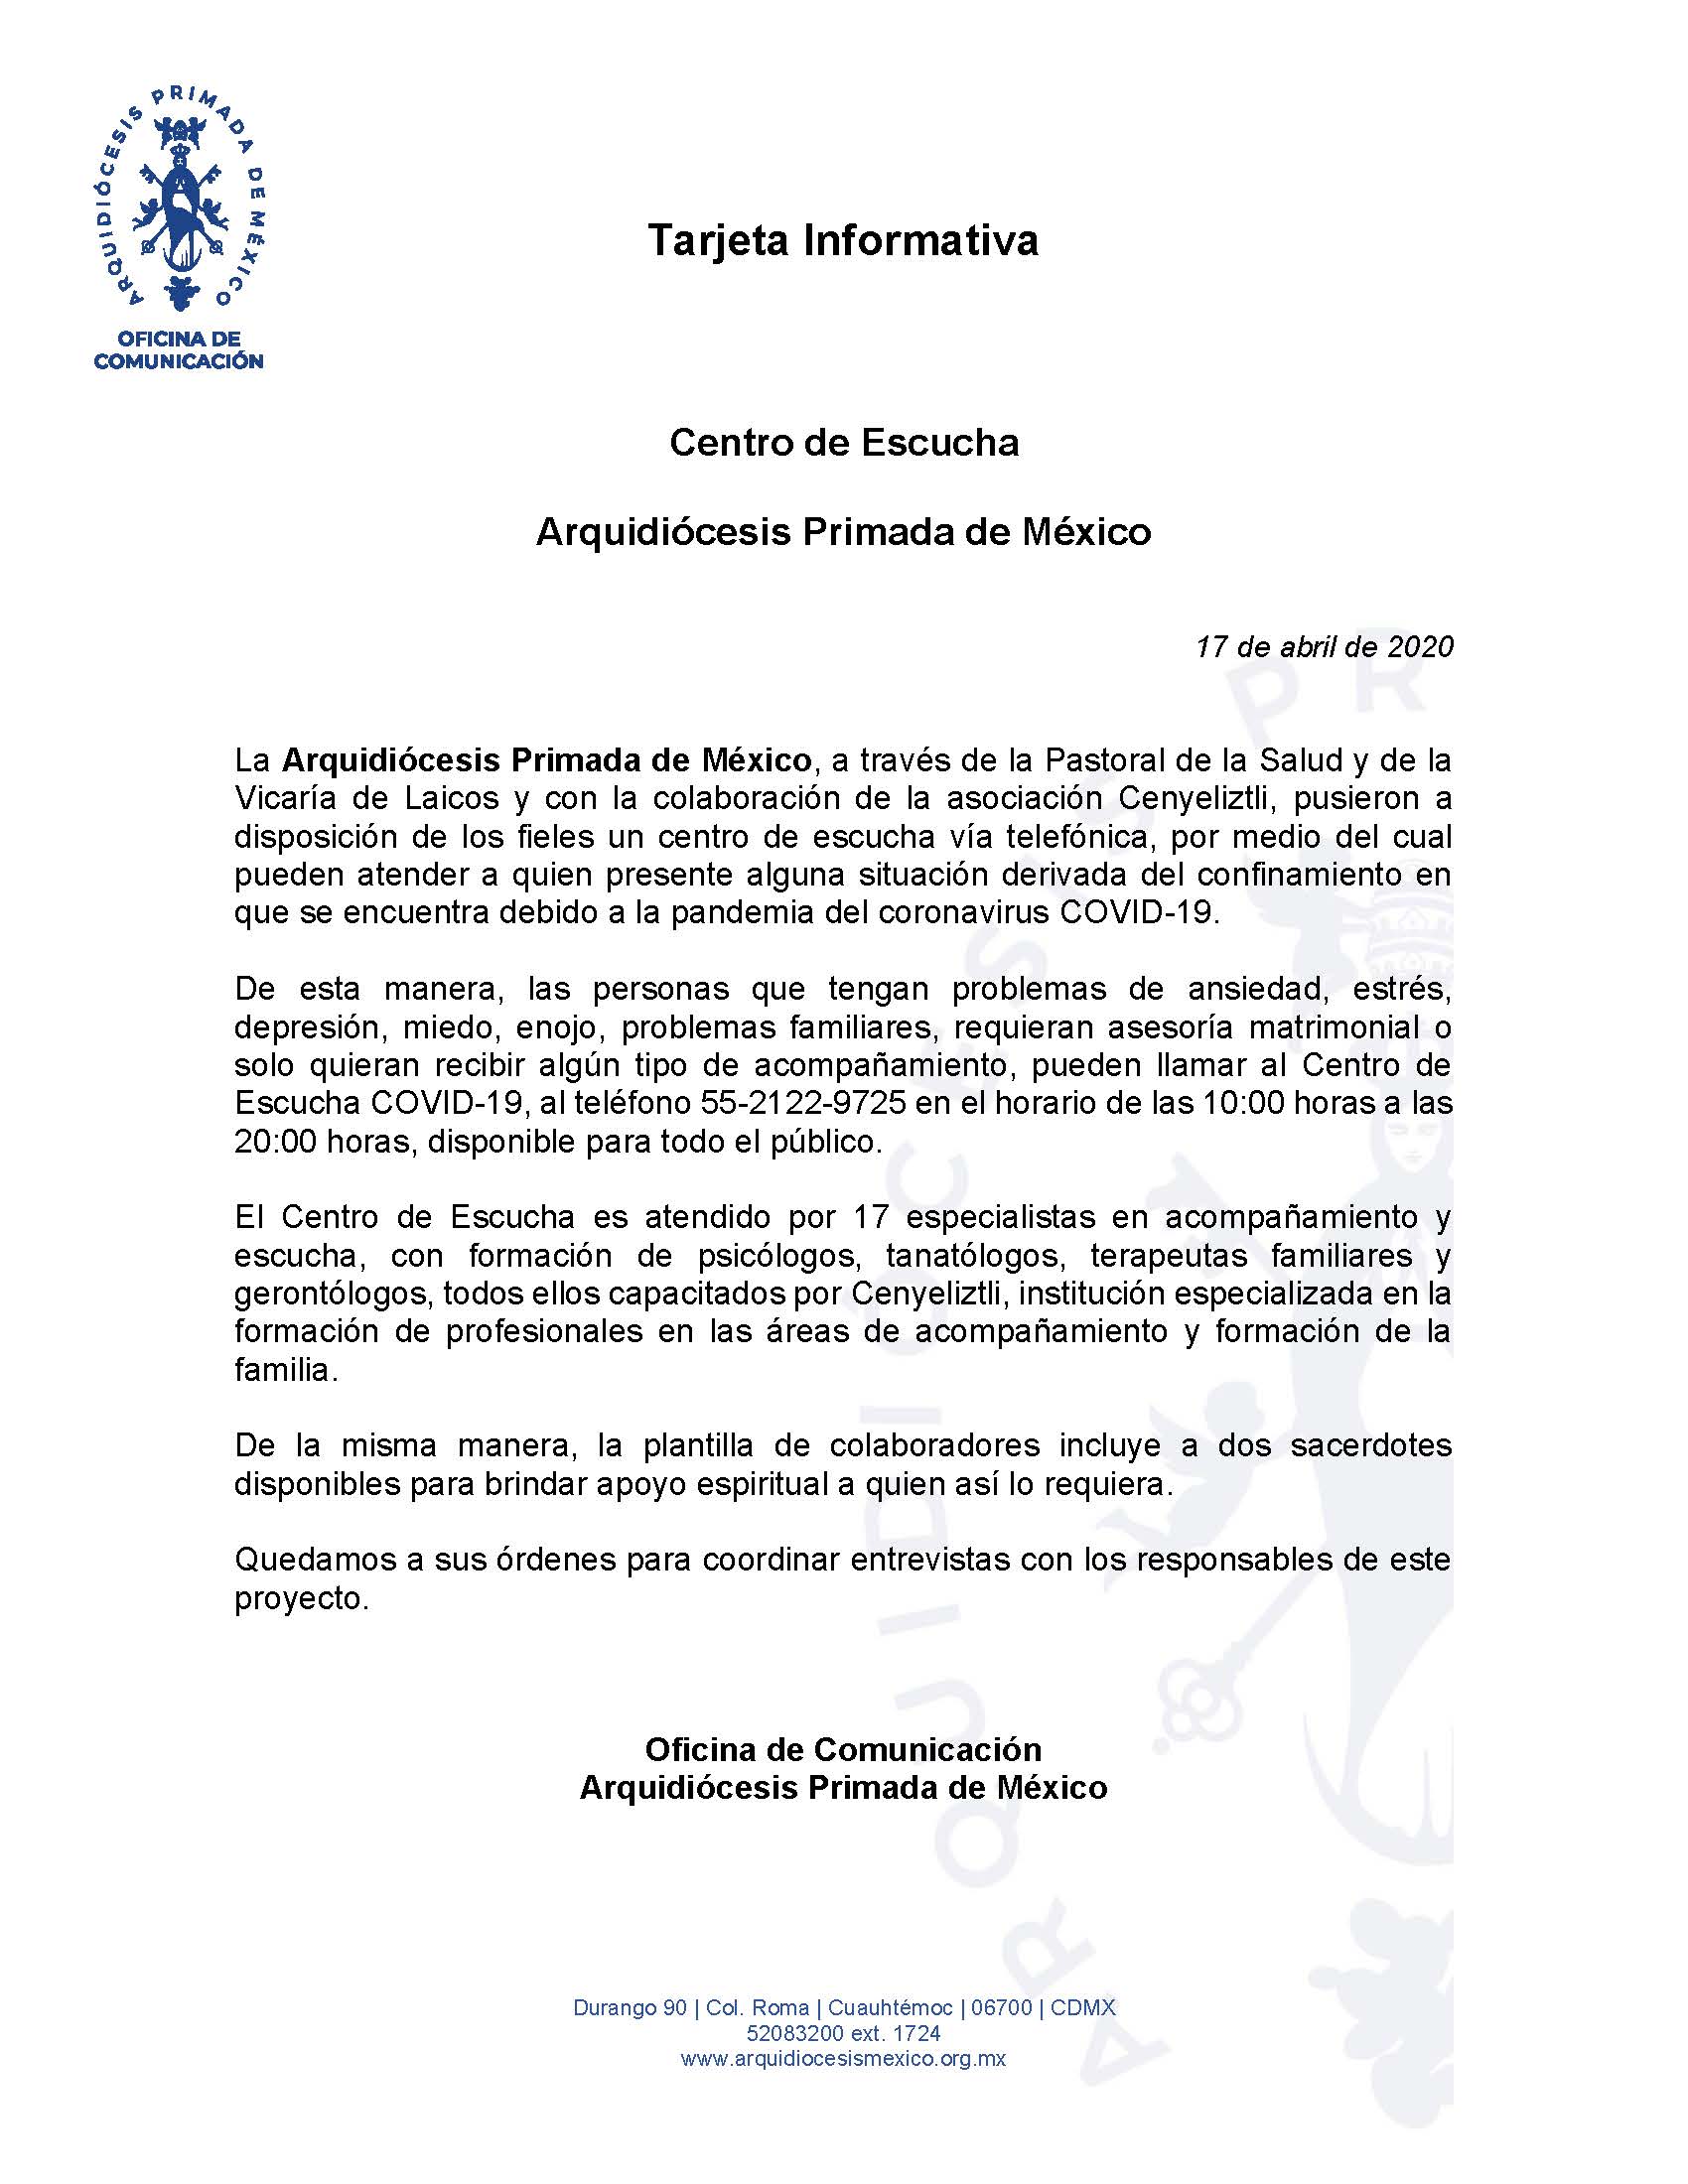 200417 Arquidiocesis Primada de Mexico Tarjeta Informativa